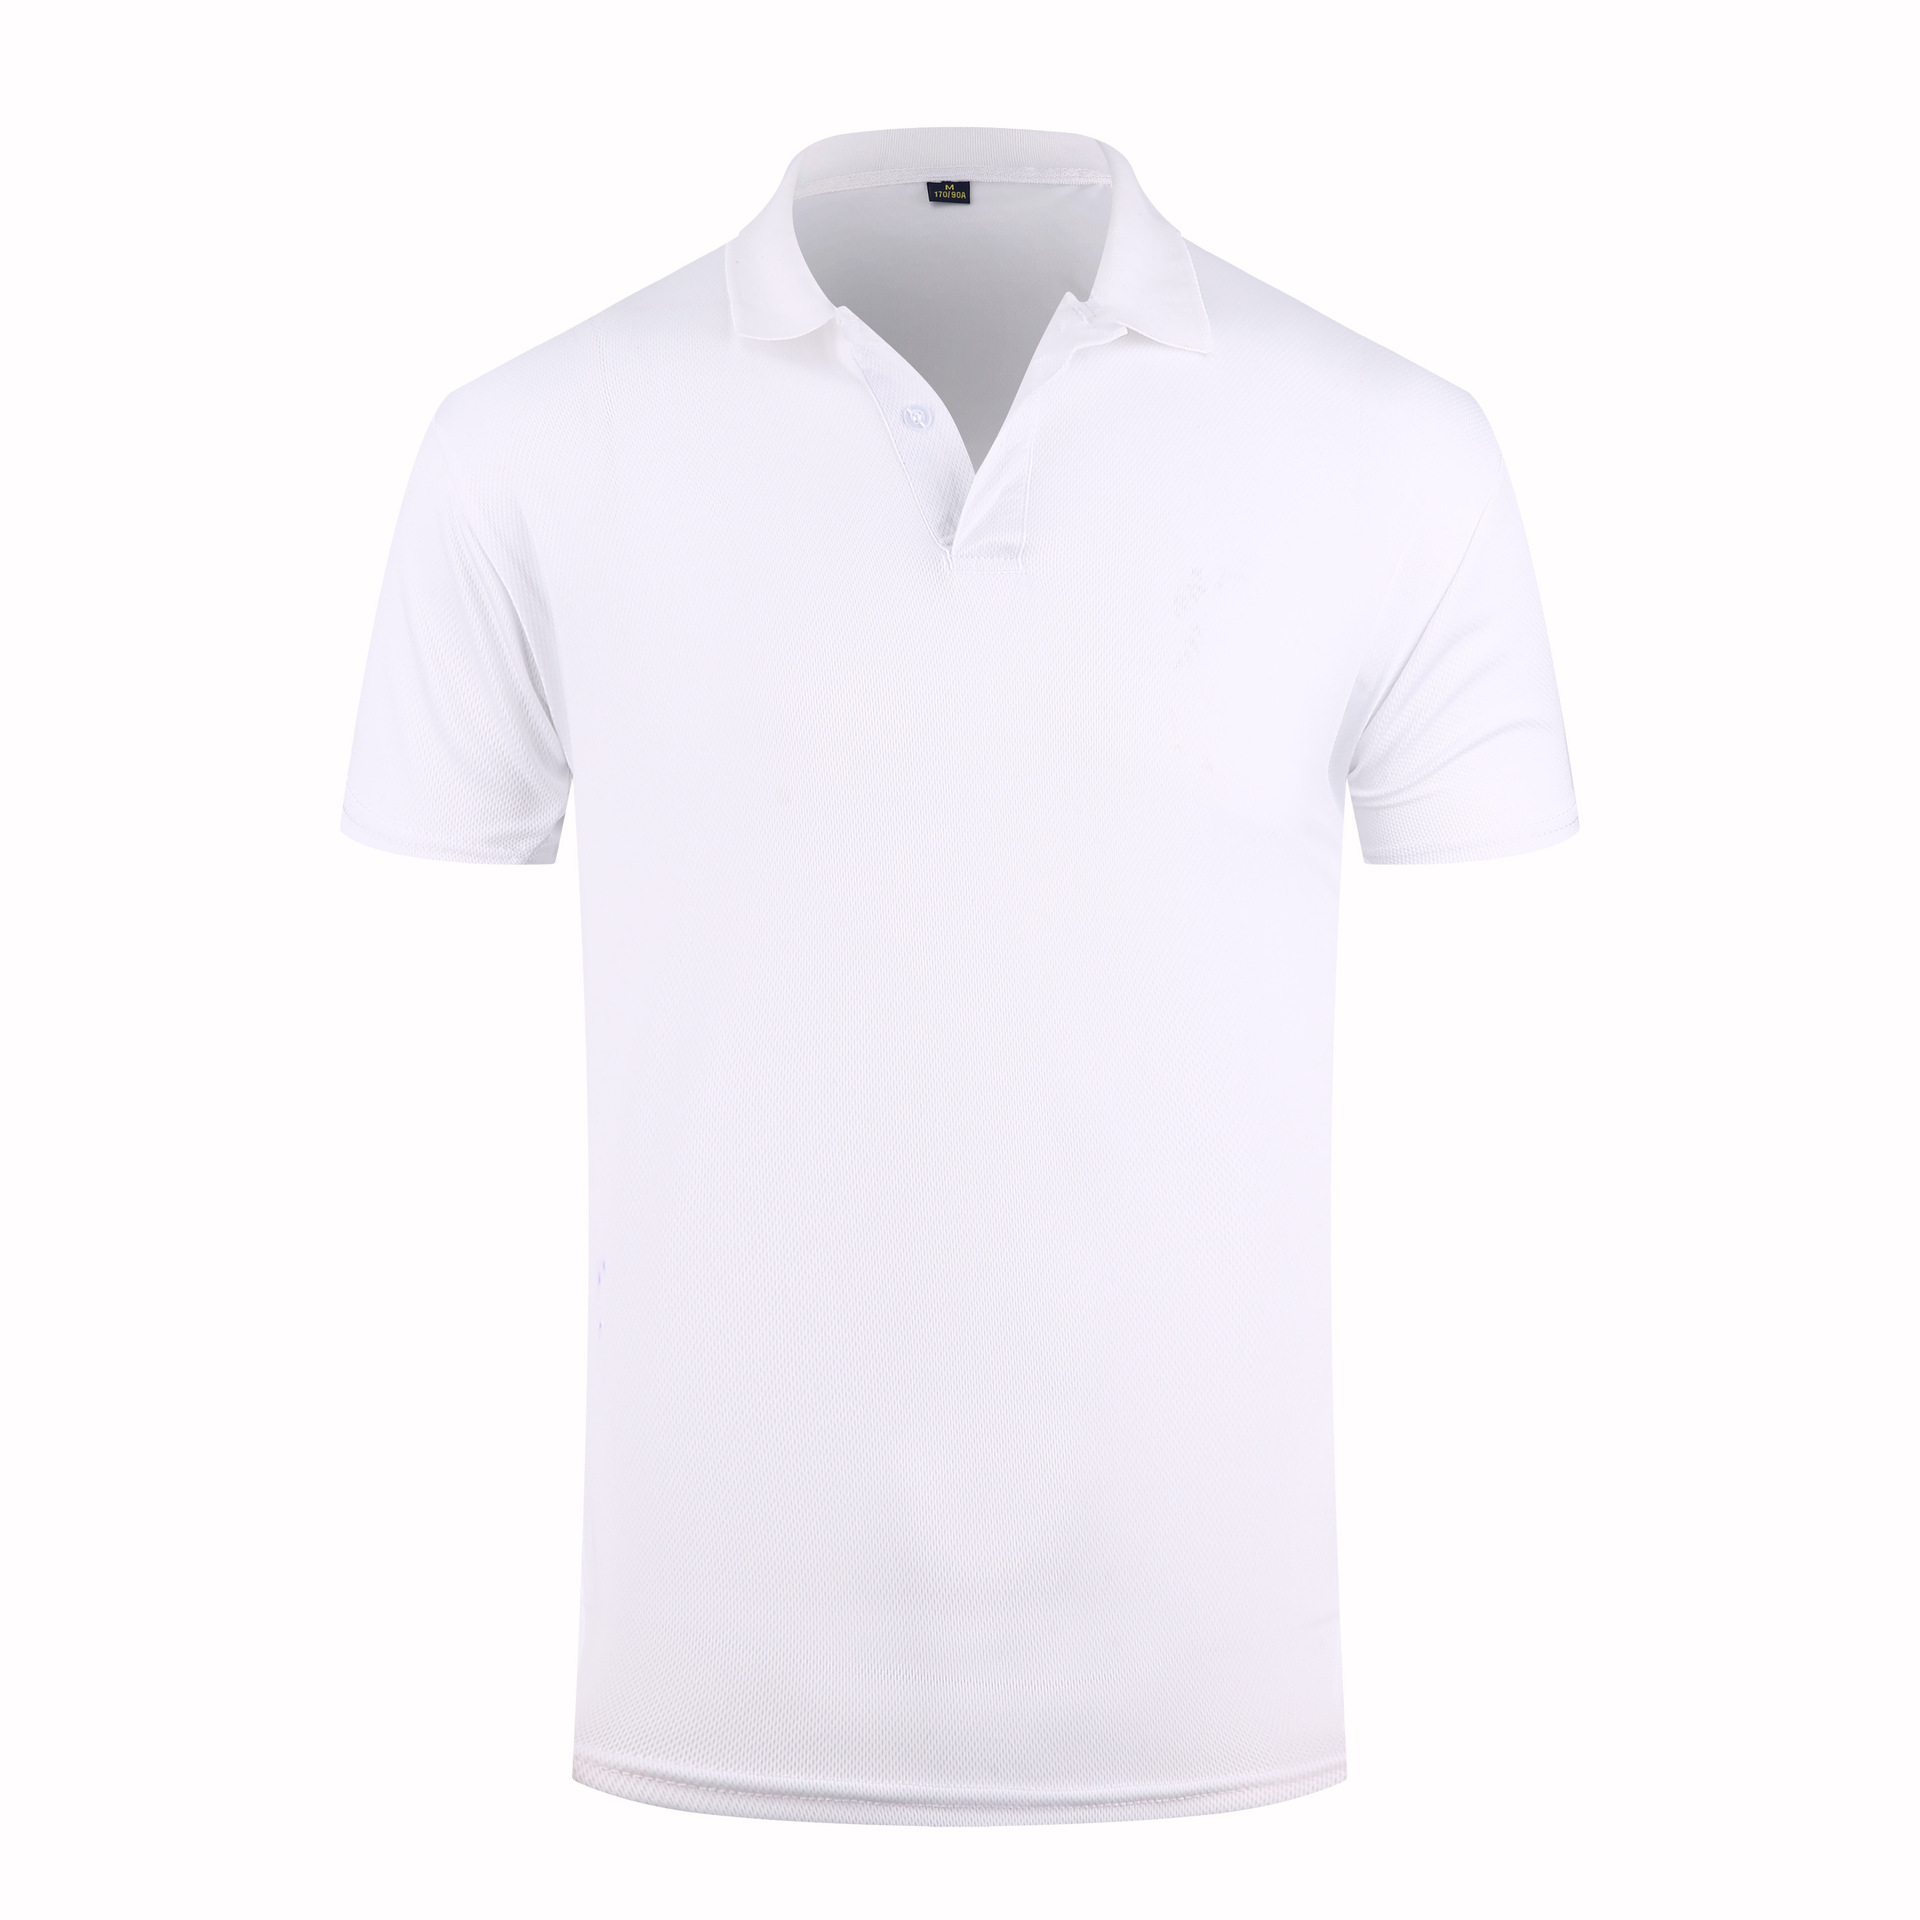 Sports Quick-Drying T-shirt Develop Logo Printing Culture Advertising Shirt Marathon Breathable Running Lapel Short Sleeve Polo Shirt